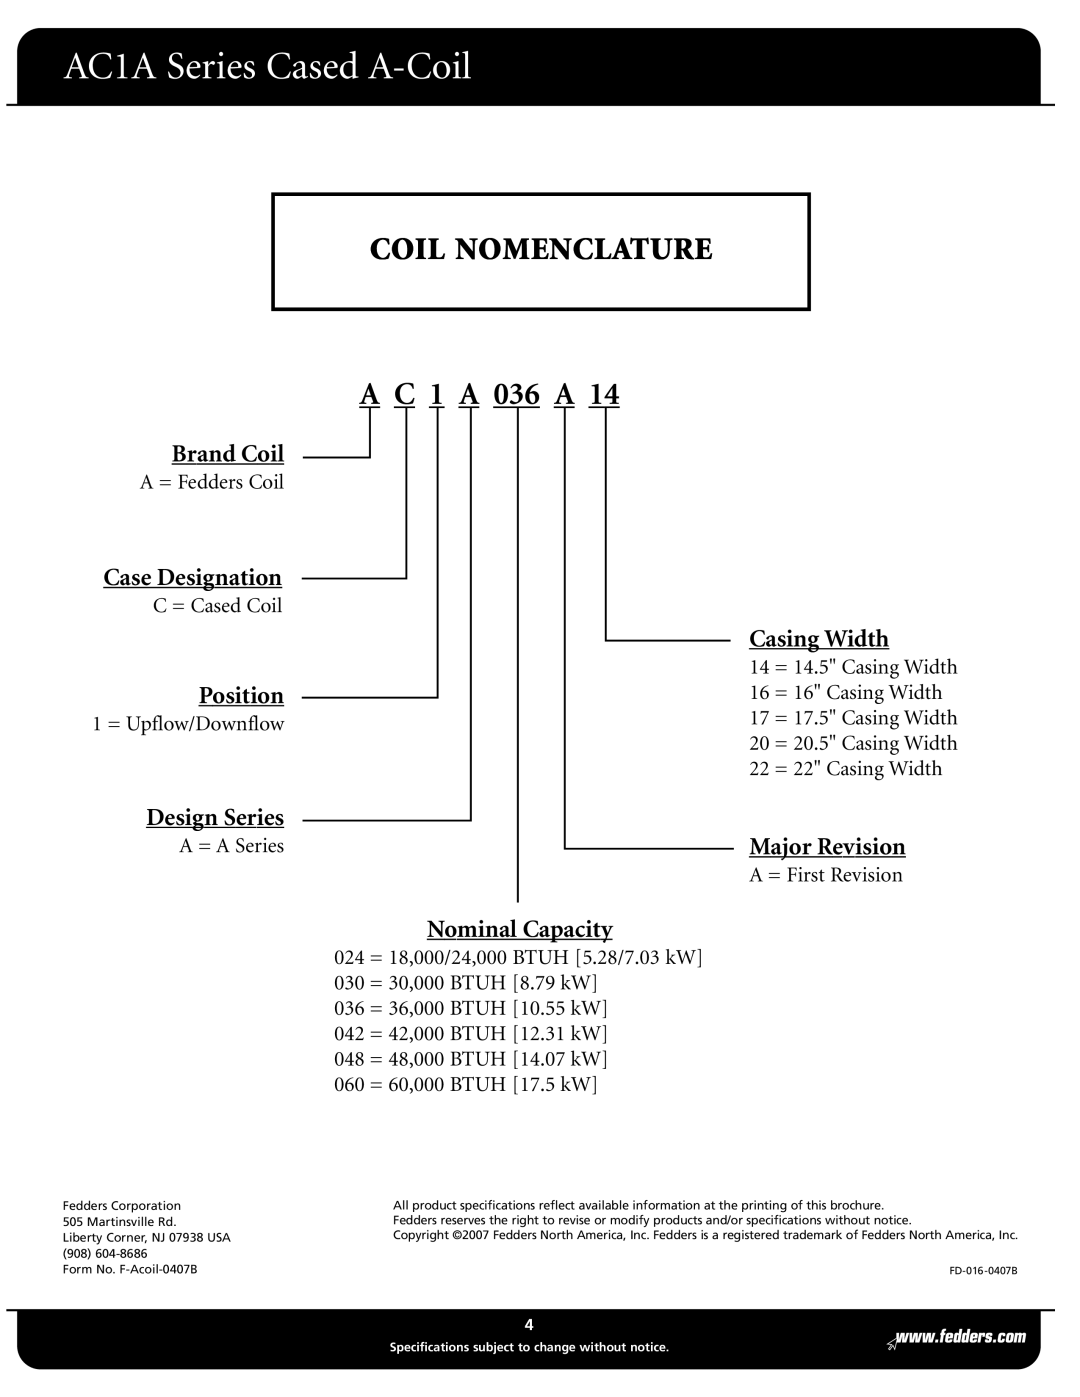 Fedders AC1A Series Cased A-Coil, Coil Nomenclature, A C 1 A 036 A 14 * A, Brand Coil, Case Designation, Position 